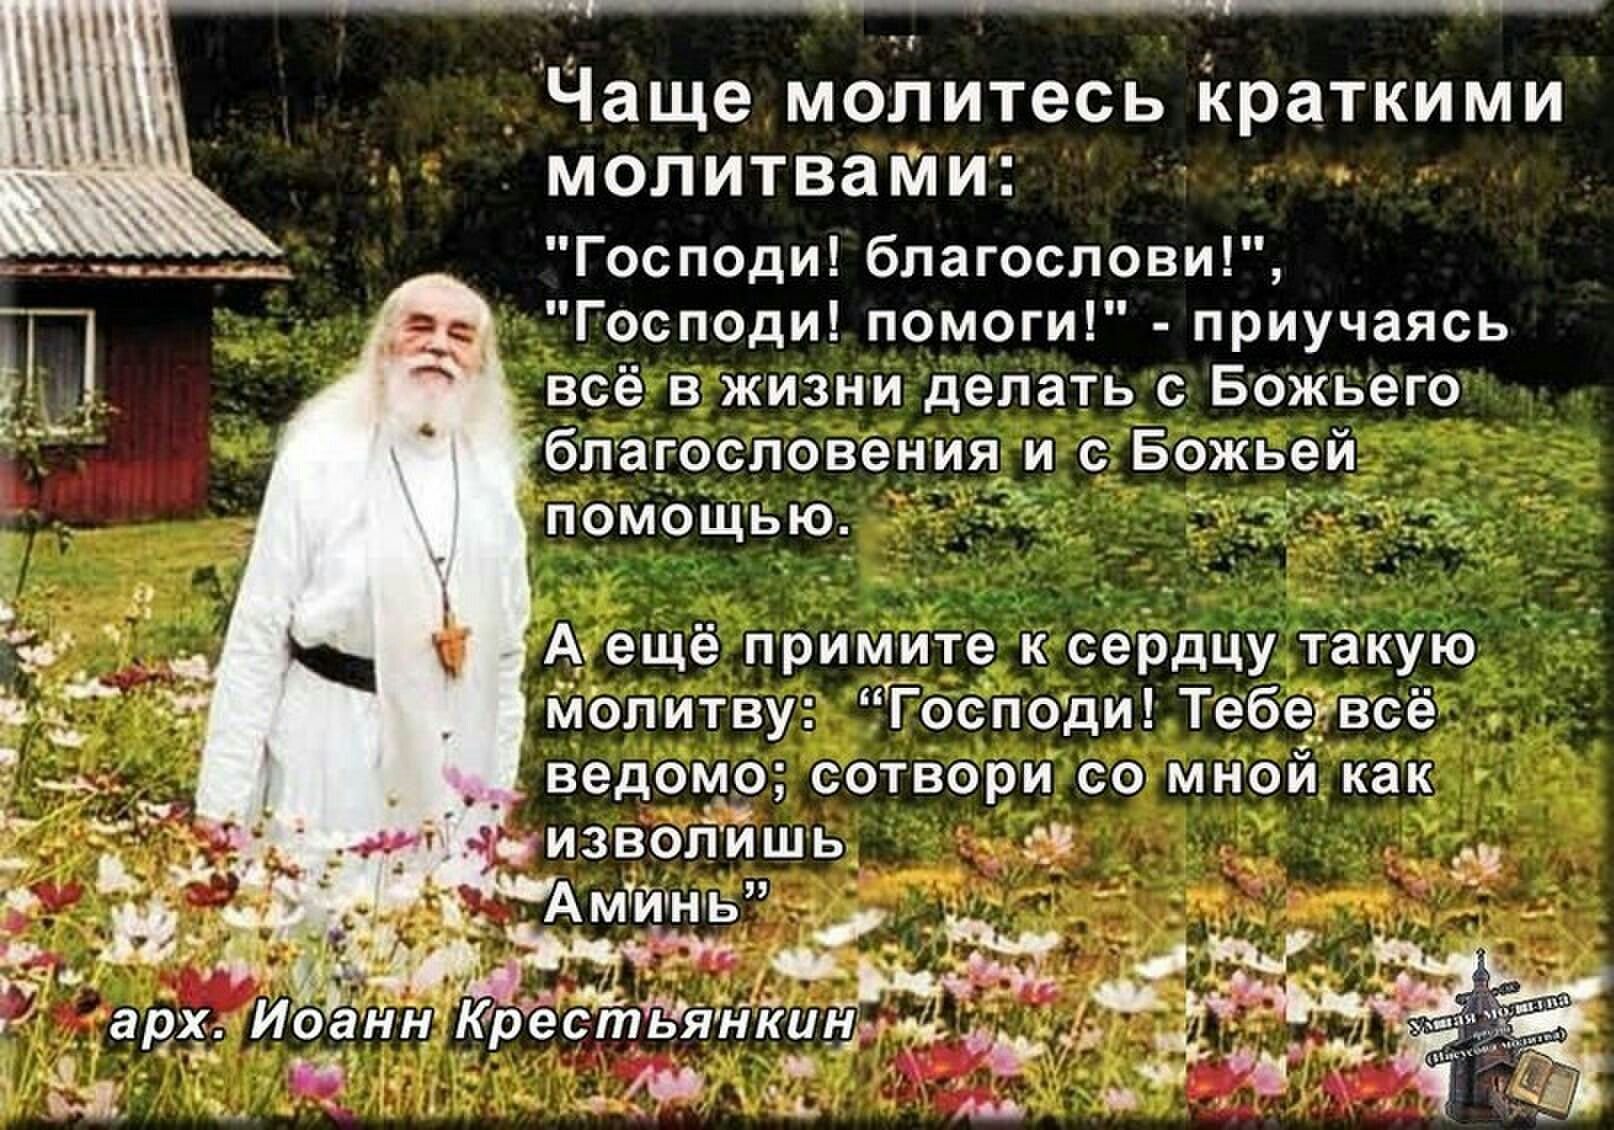 Разрешено ли православным